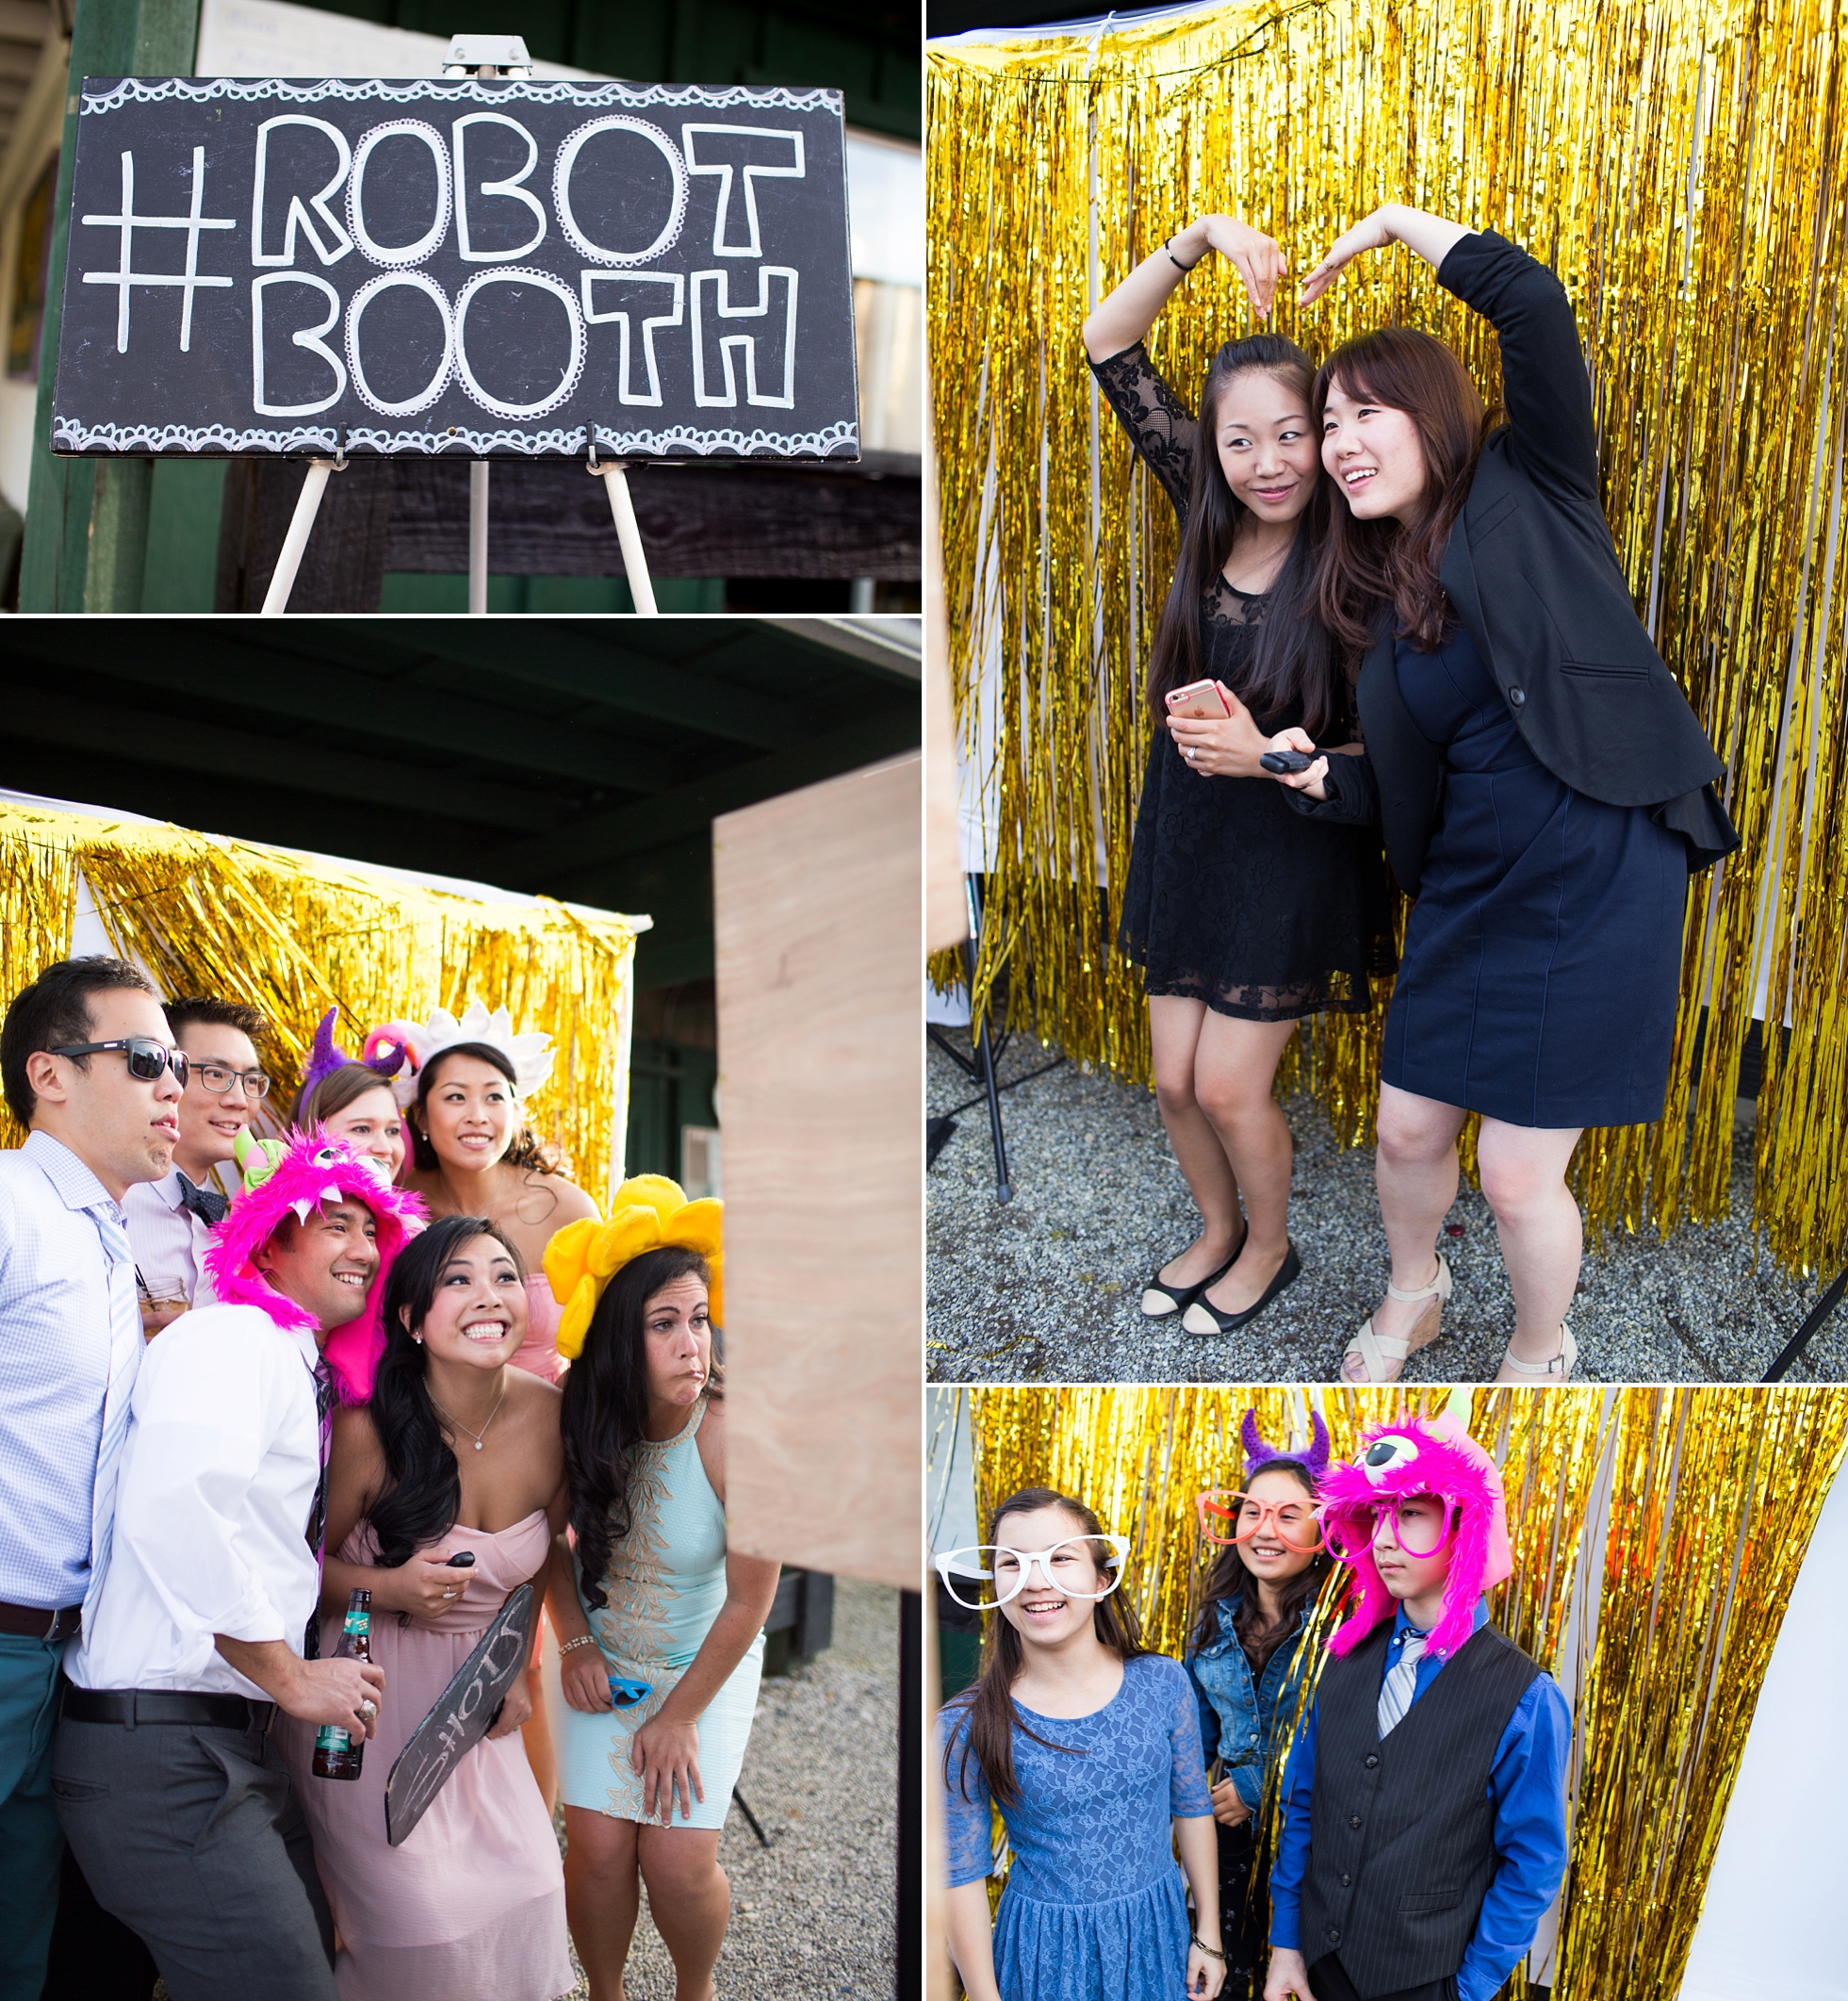 robot booth wedding